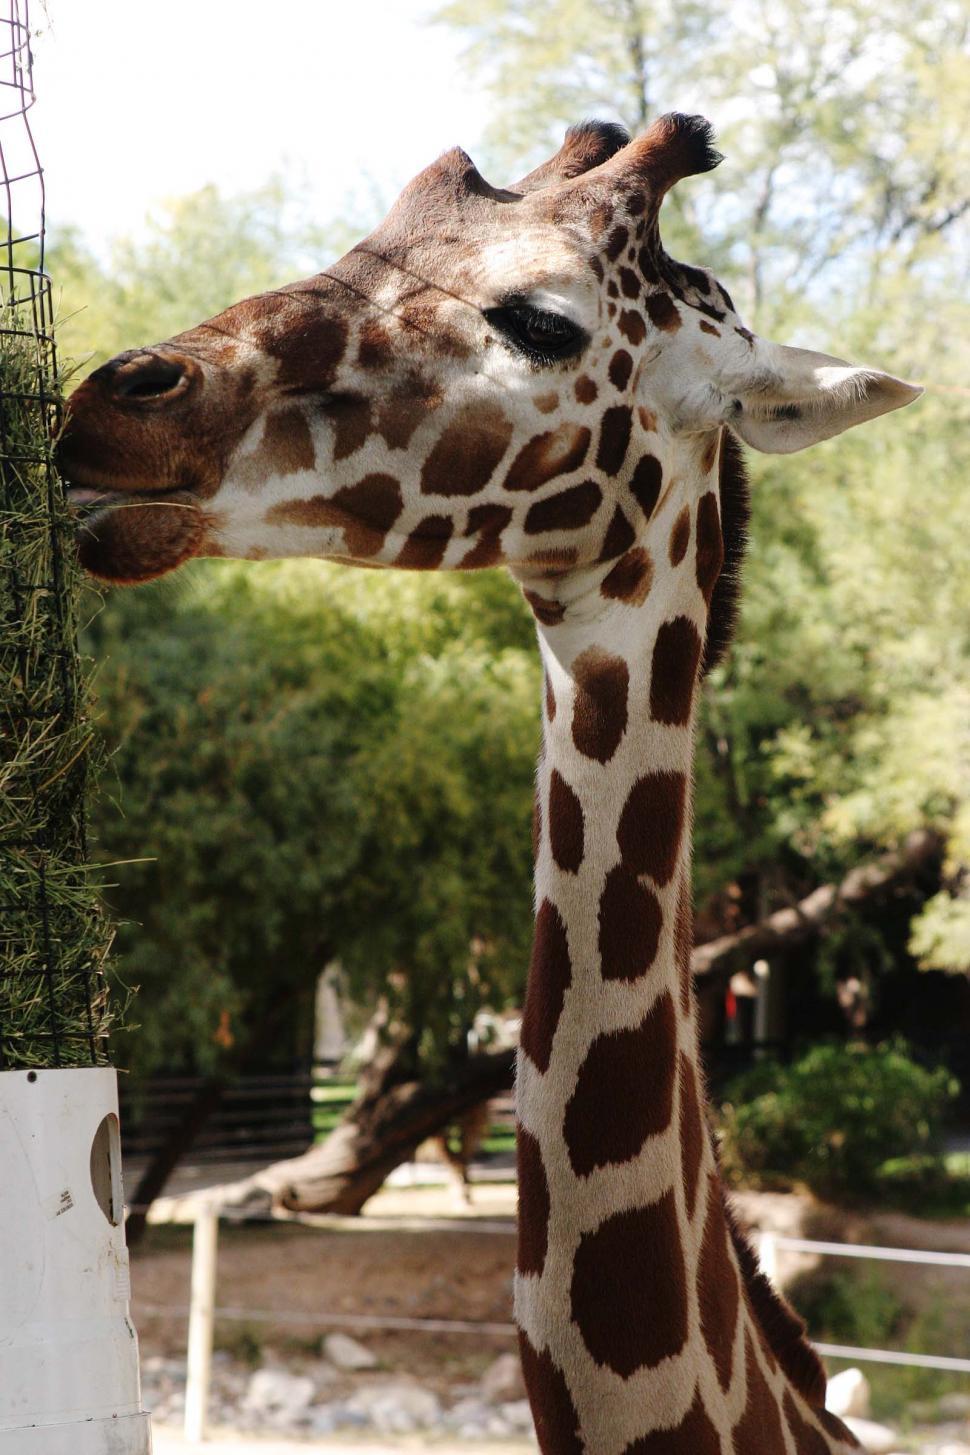 Free Image of Giraffe Standing Next to Tall Tree 